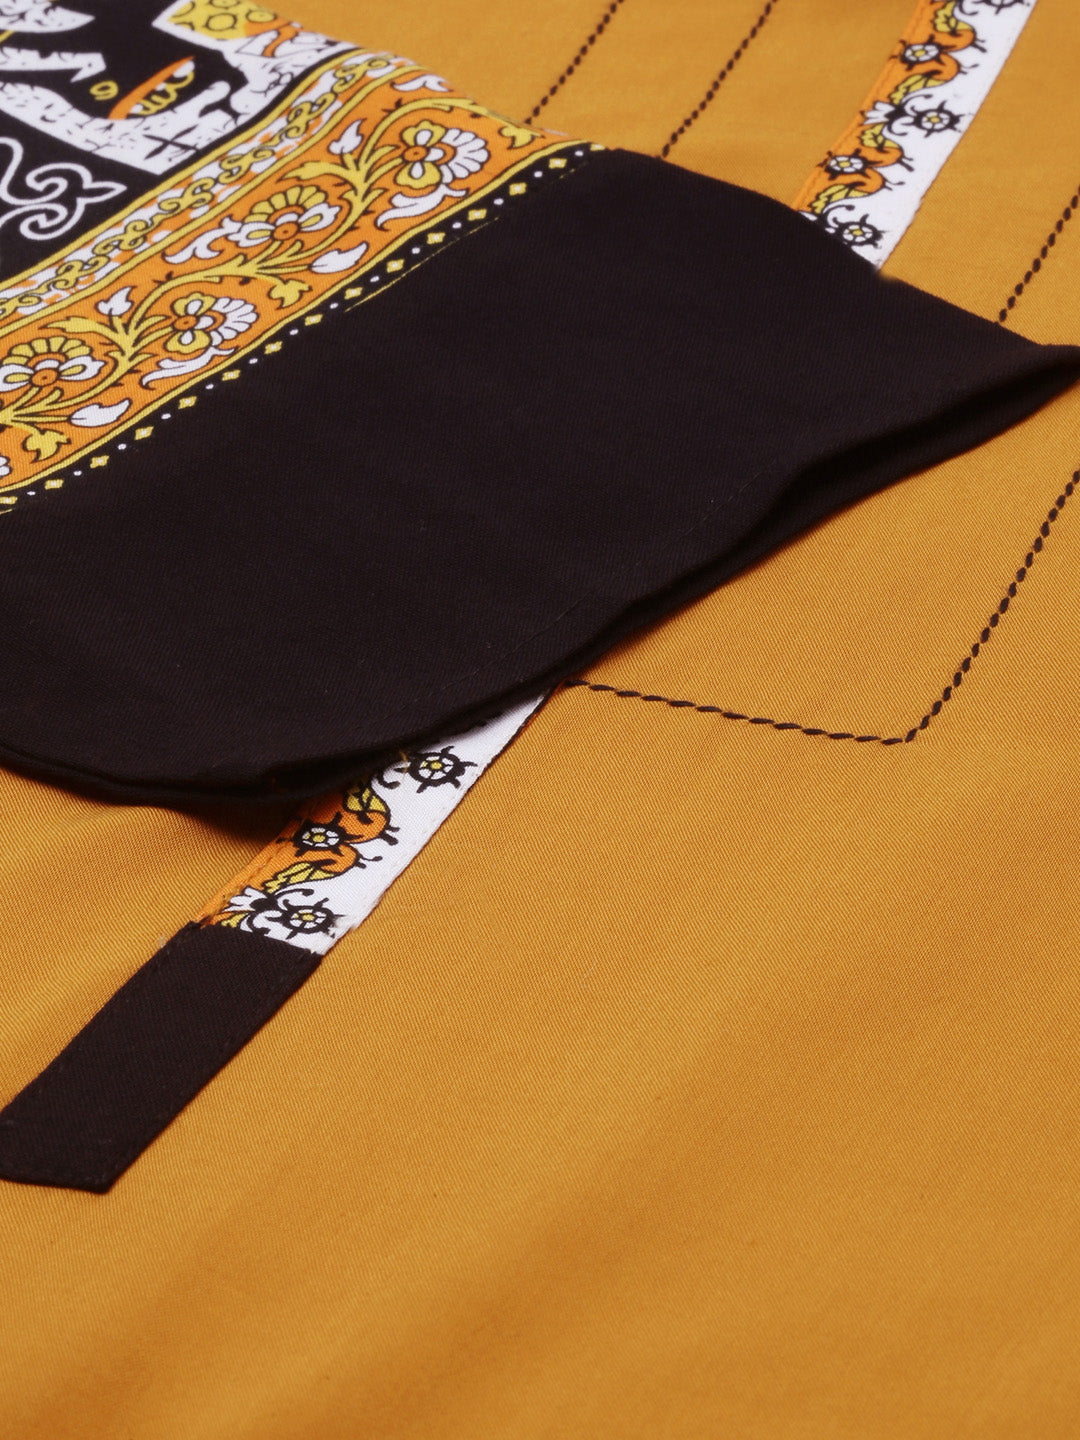 Neeru's Mustard Color Rayon Fabric Plazo Set